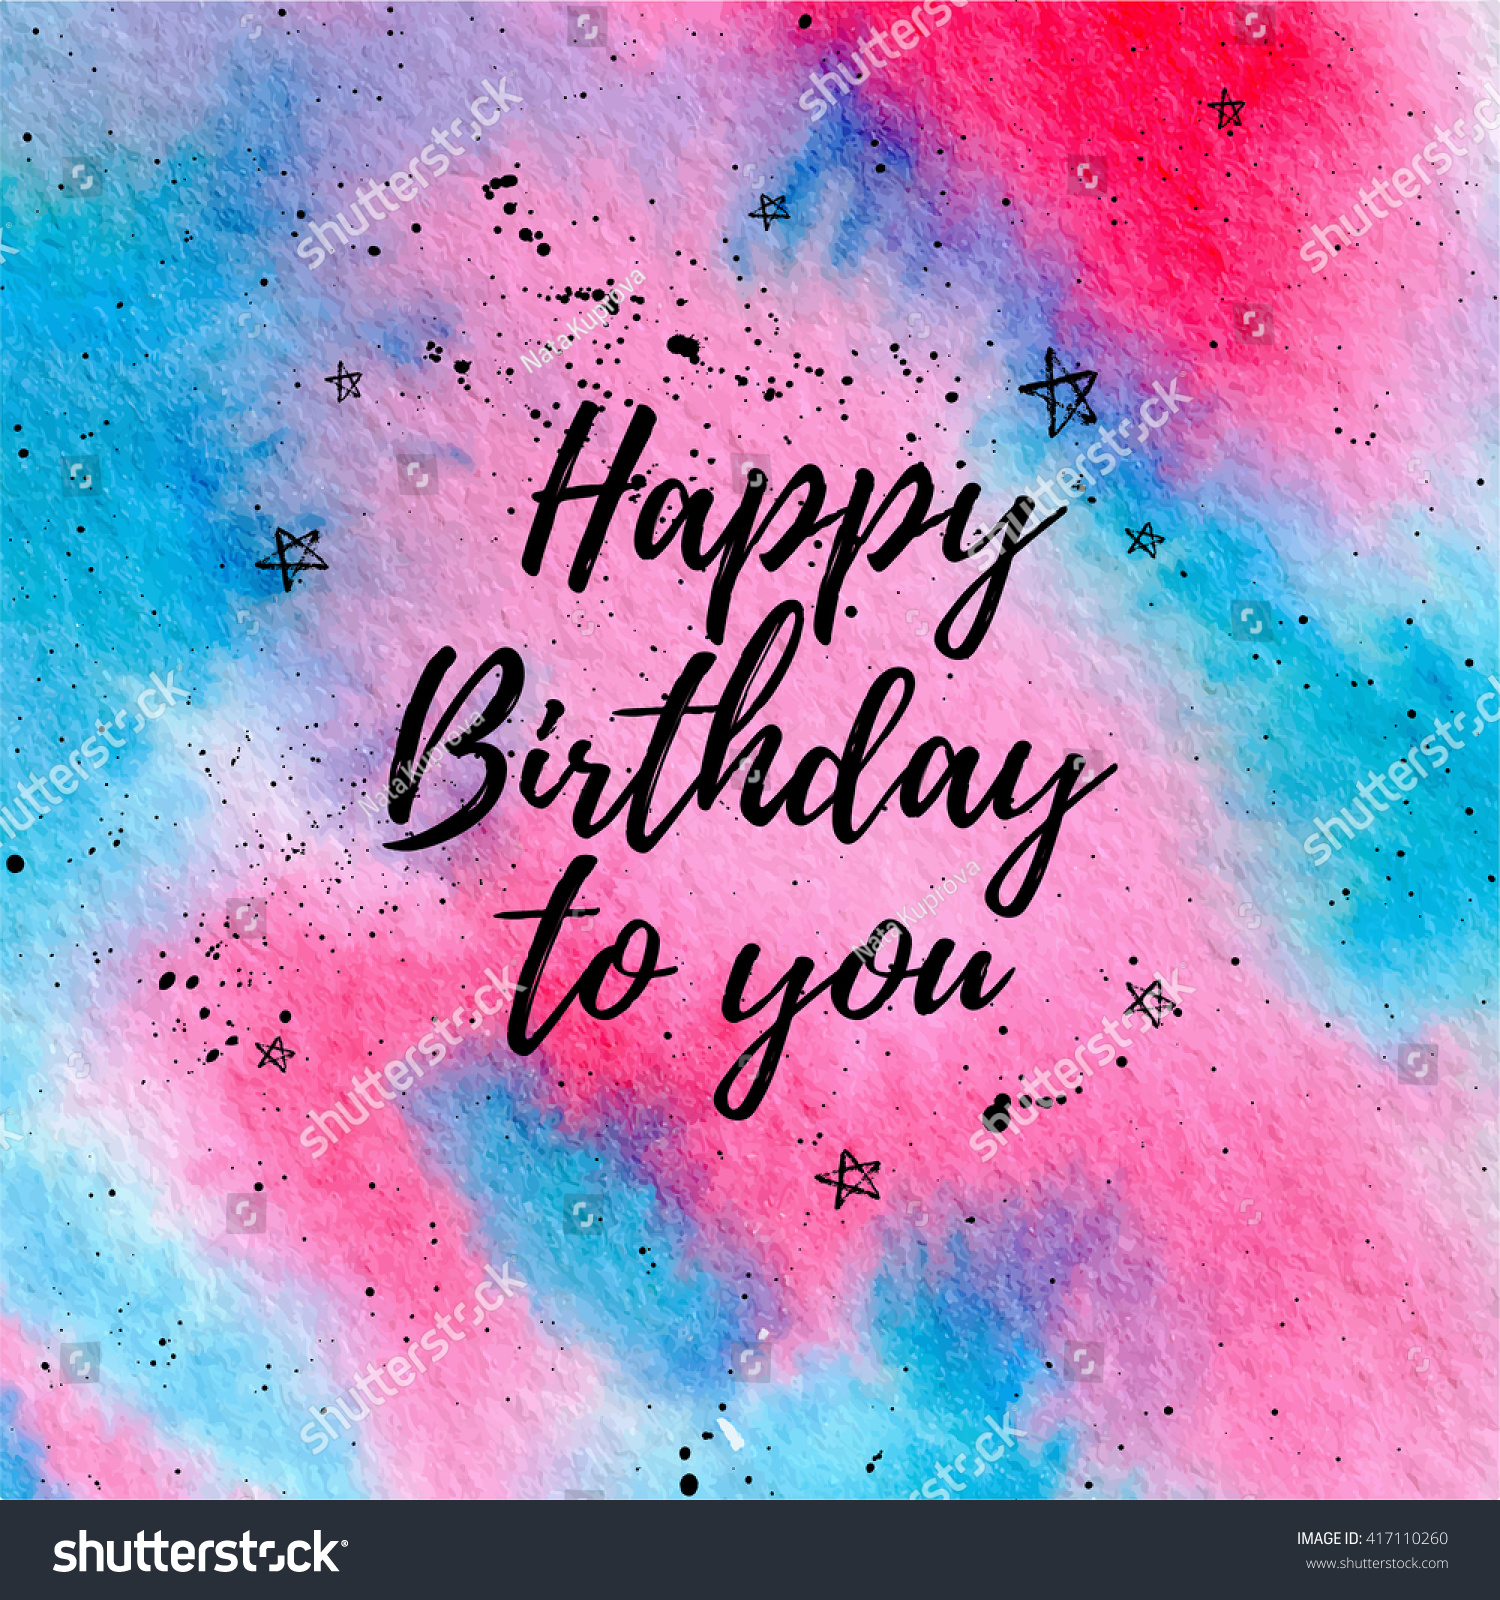 Happy Birthday You Greeting Card Fashion Stock Vector 417110260 ...